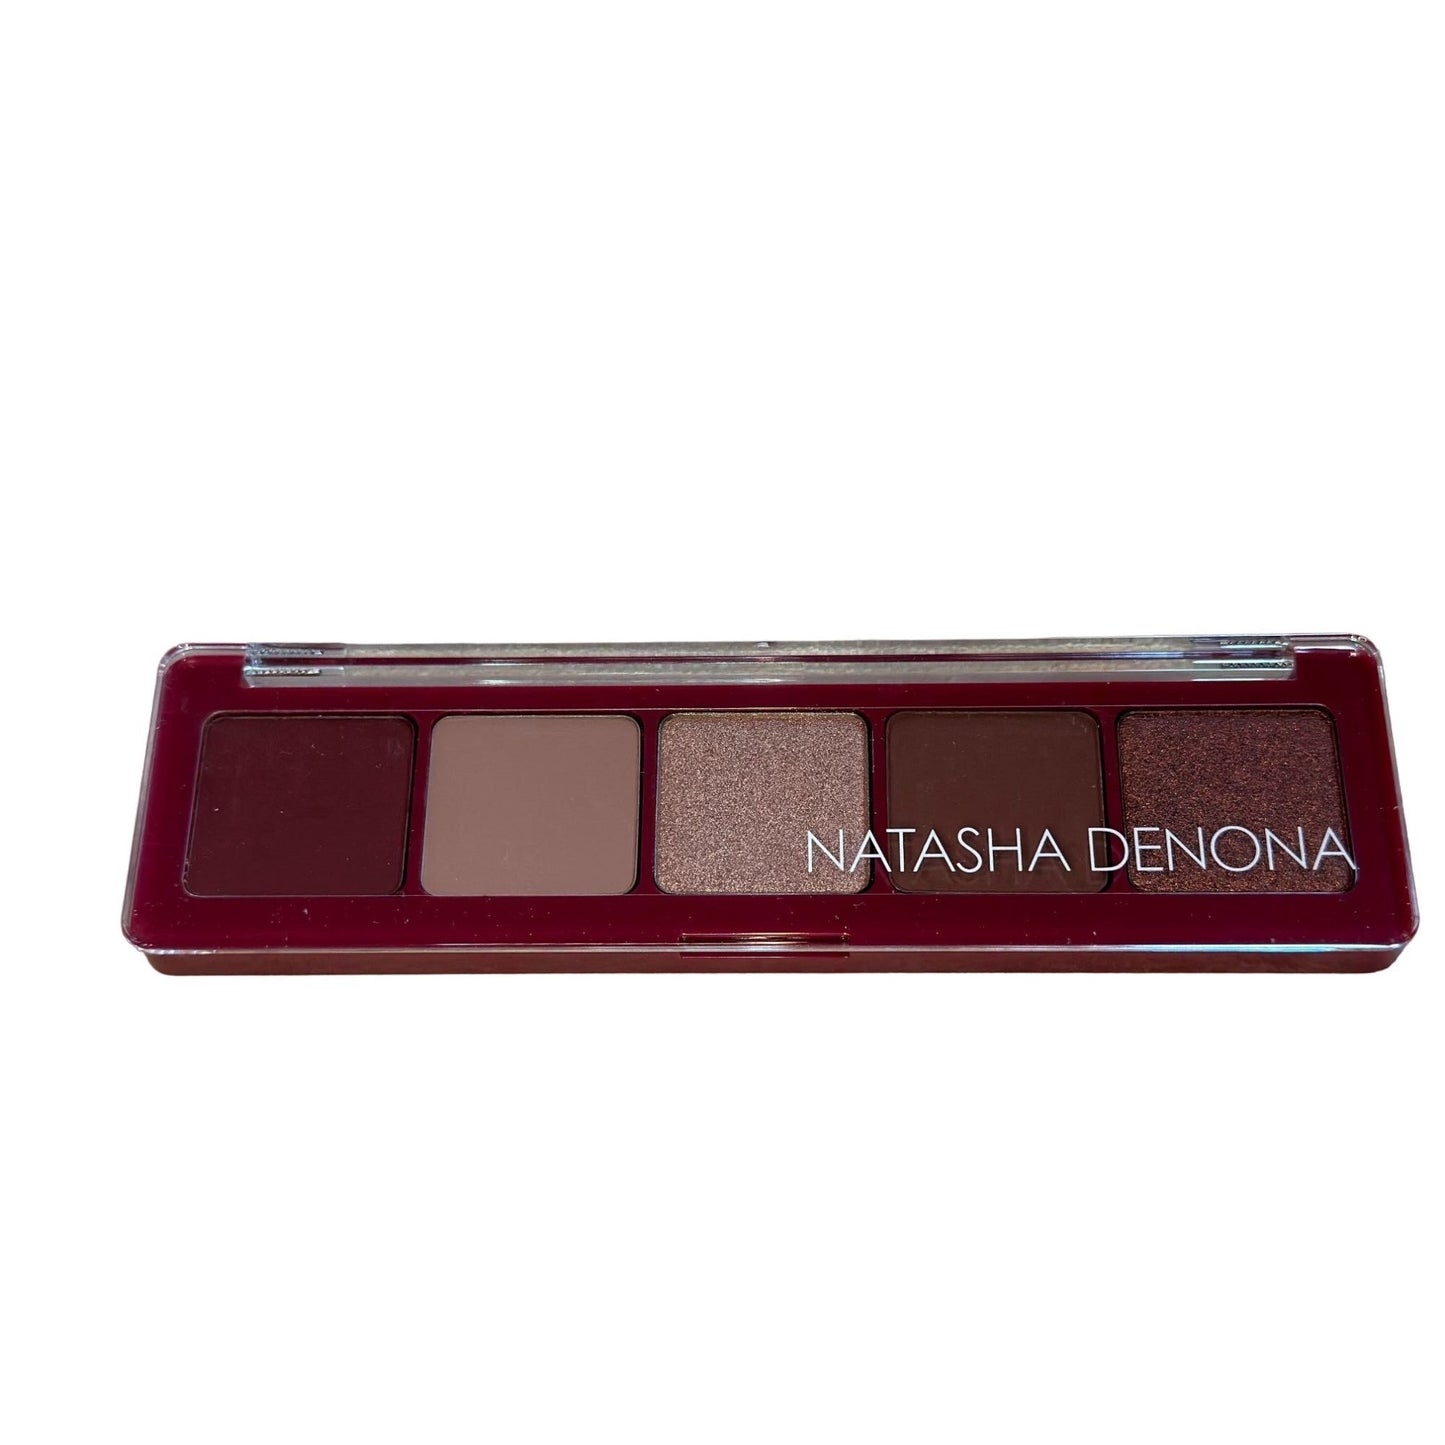 Natasha Denona Cupid Eyeshadow Palette Limited Edition New